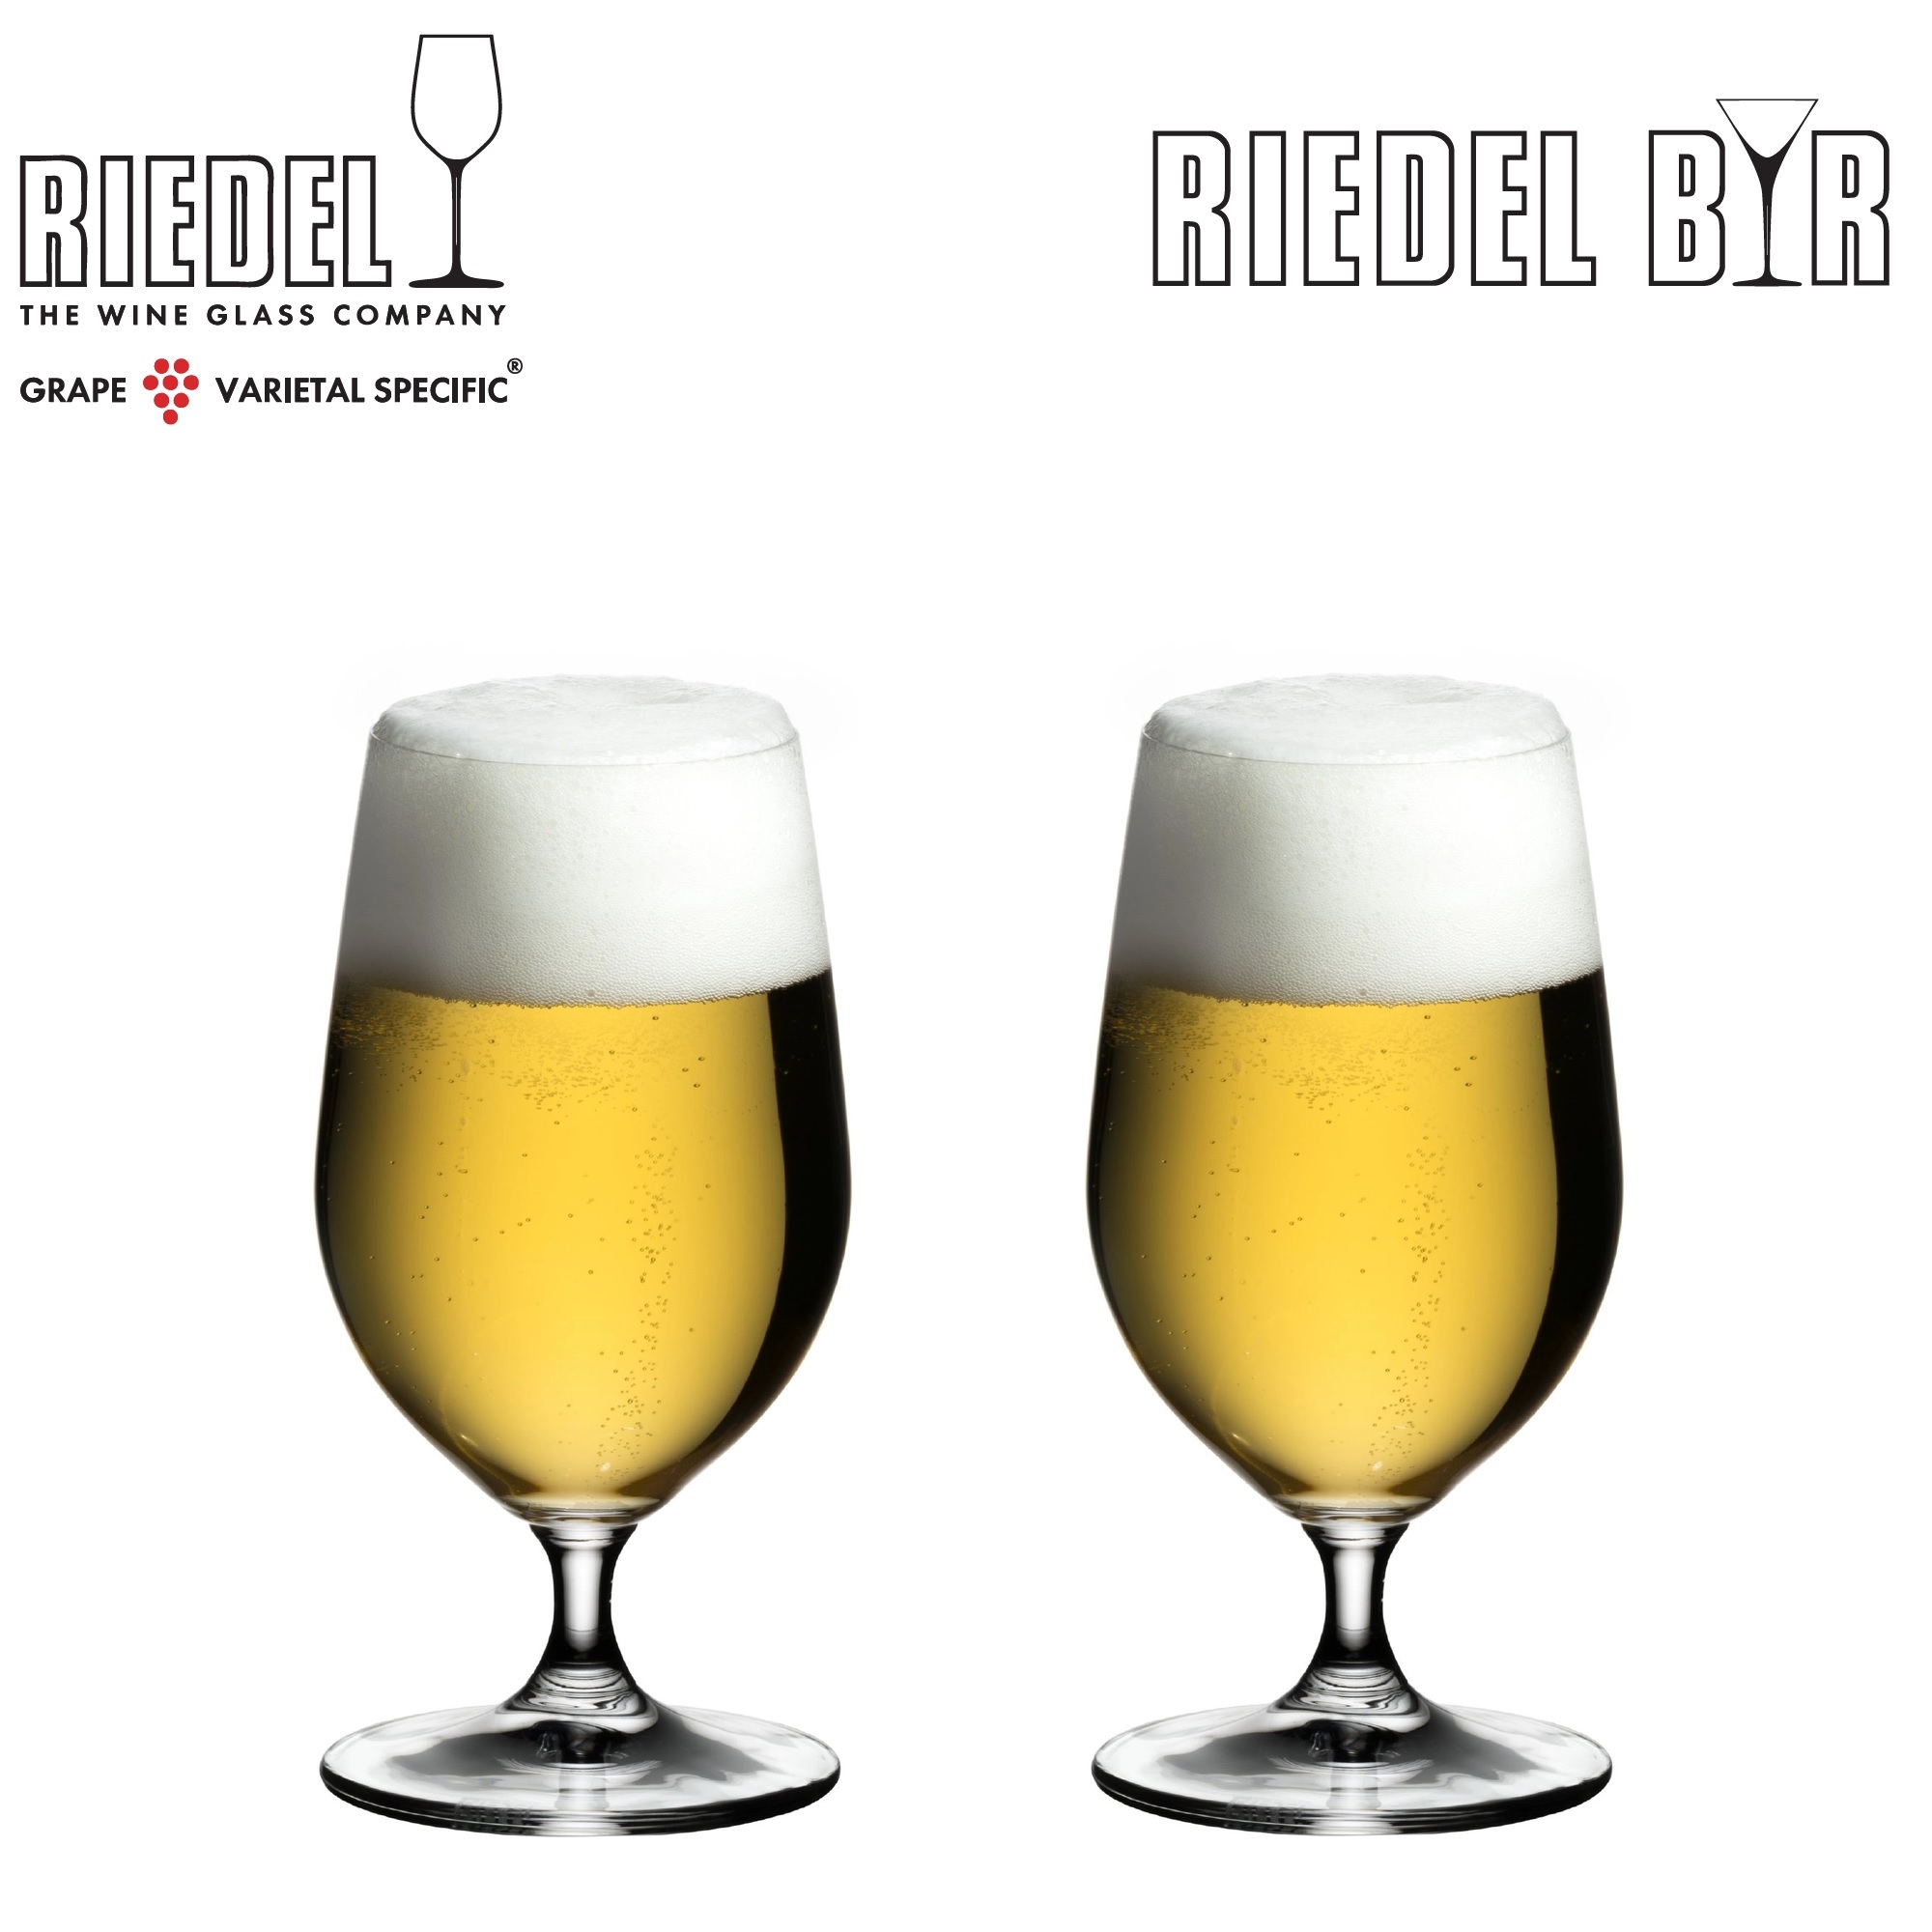 RIEDEL Bar Beer